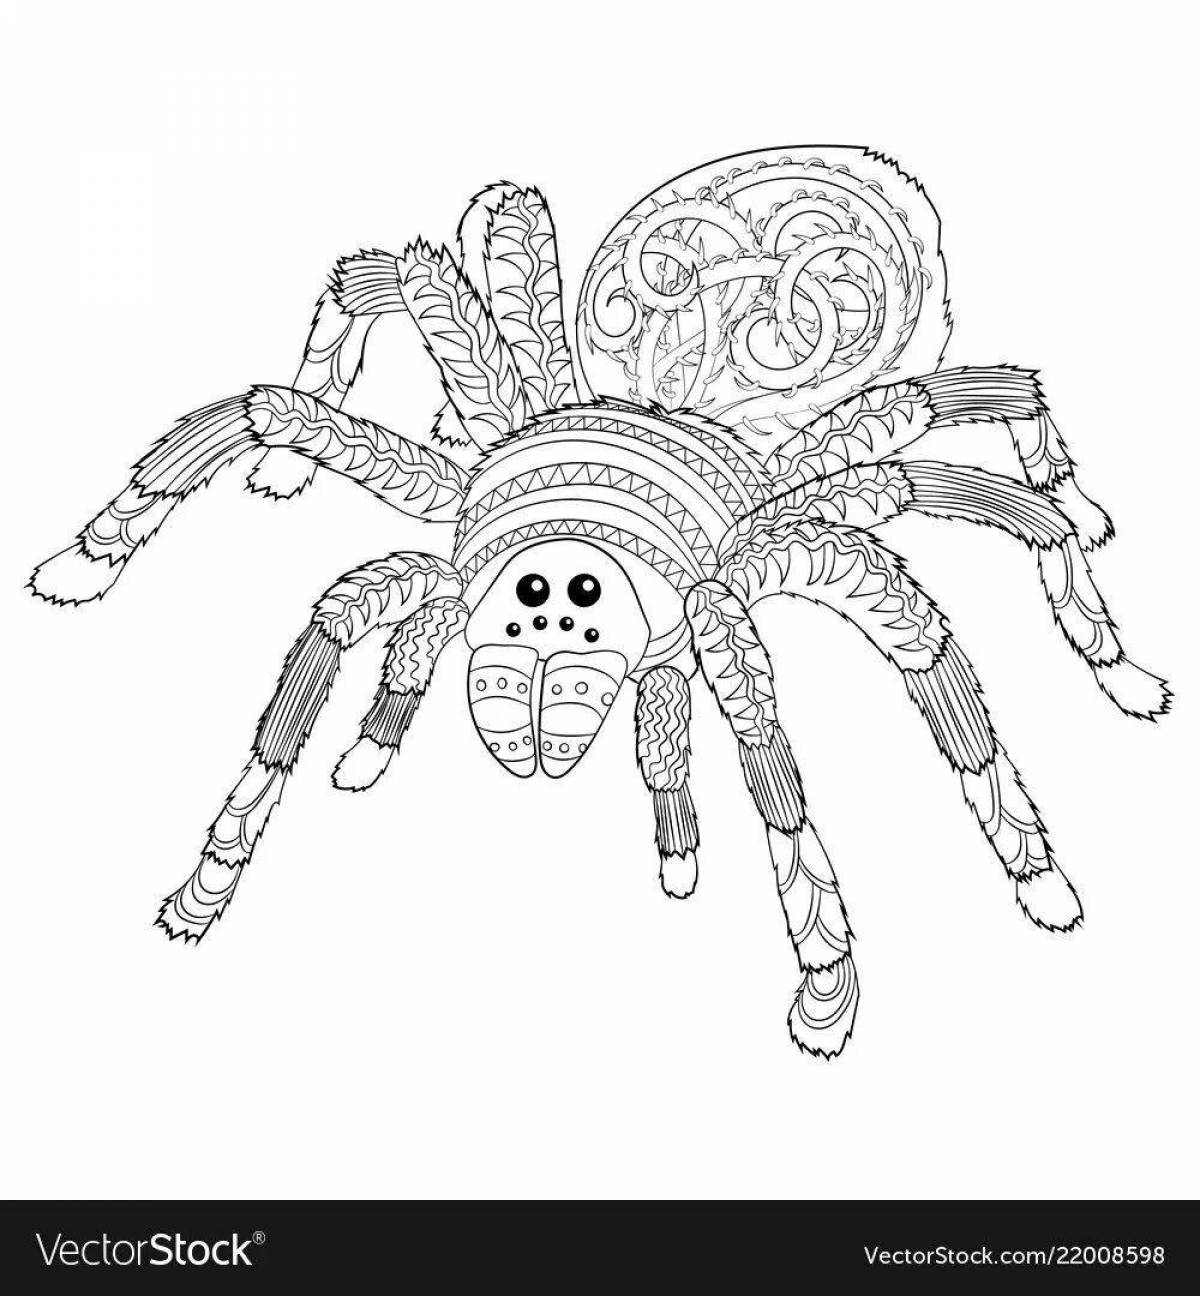 Amazing spider tarantula coloring page